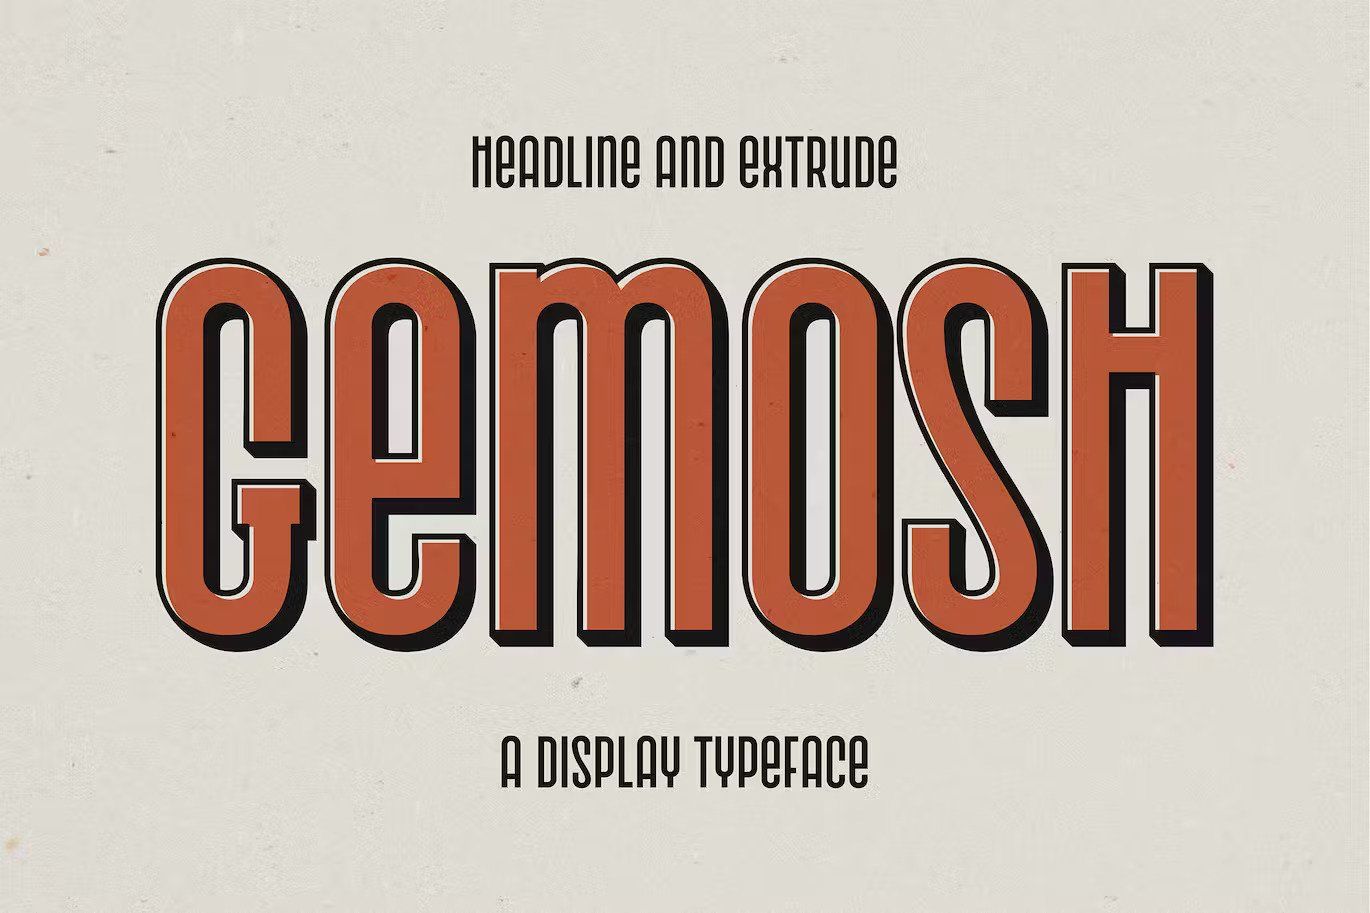 A retro modern display typeface